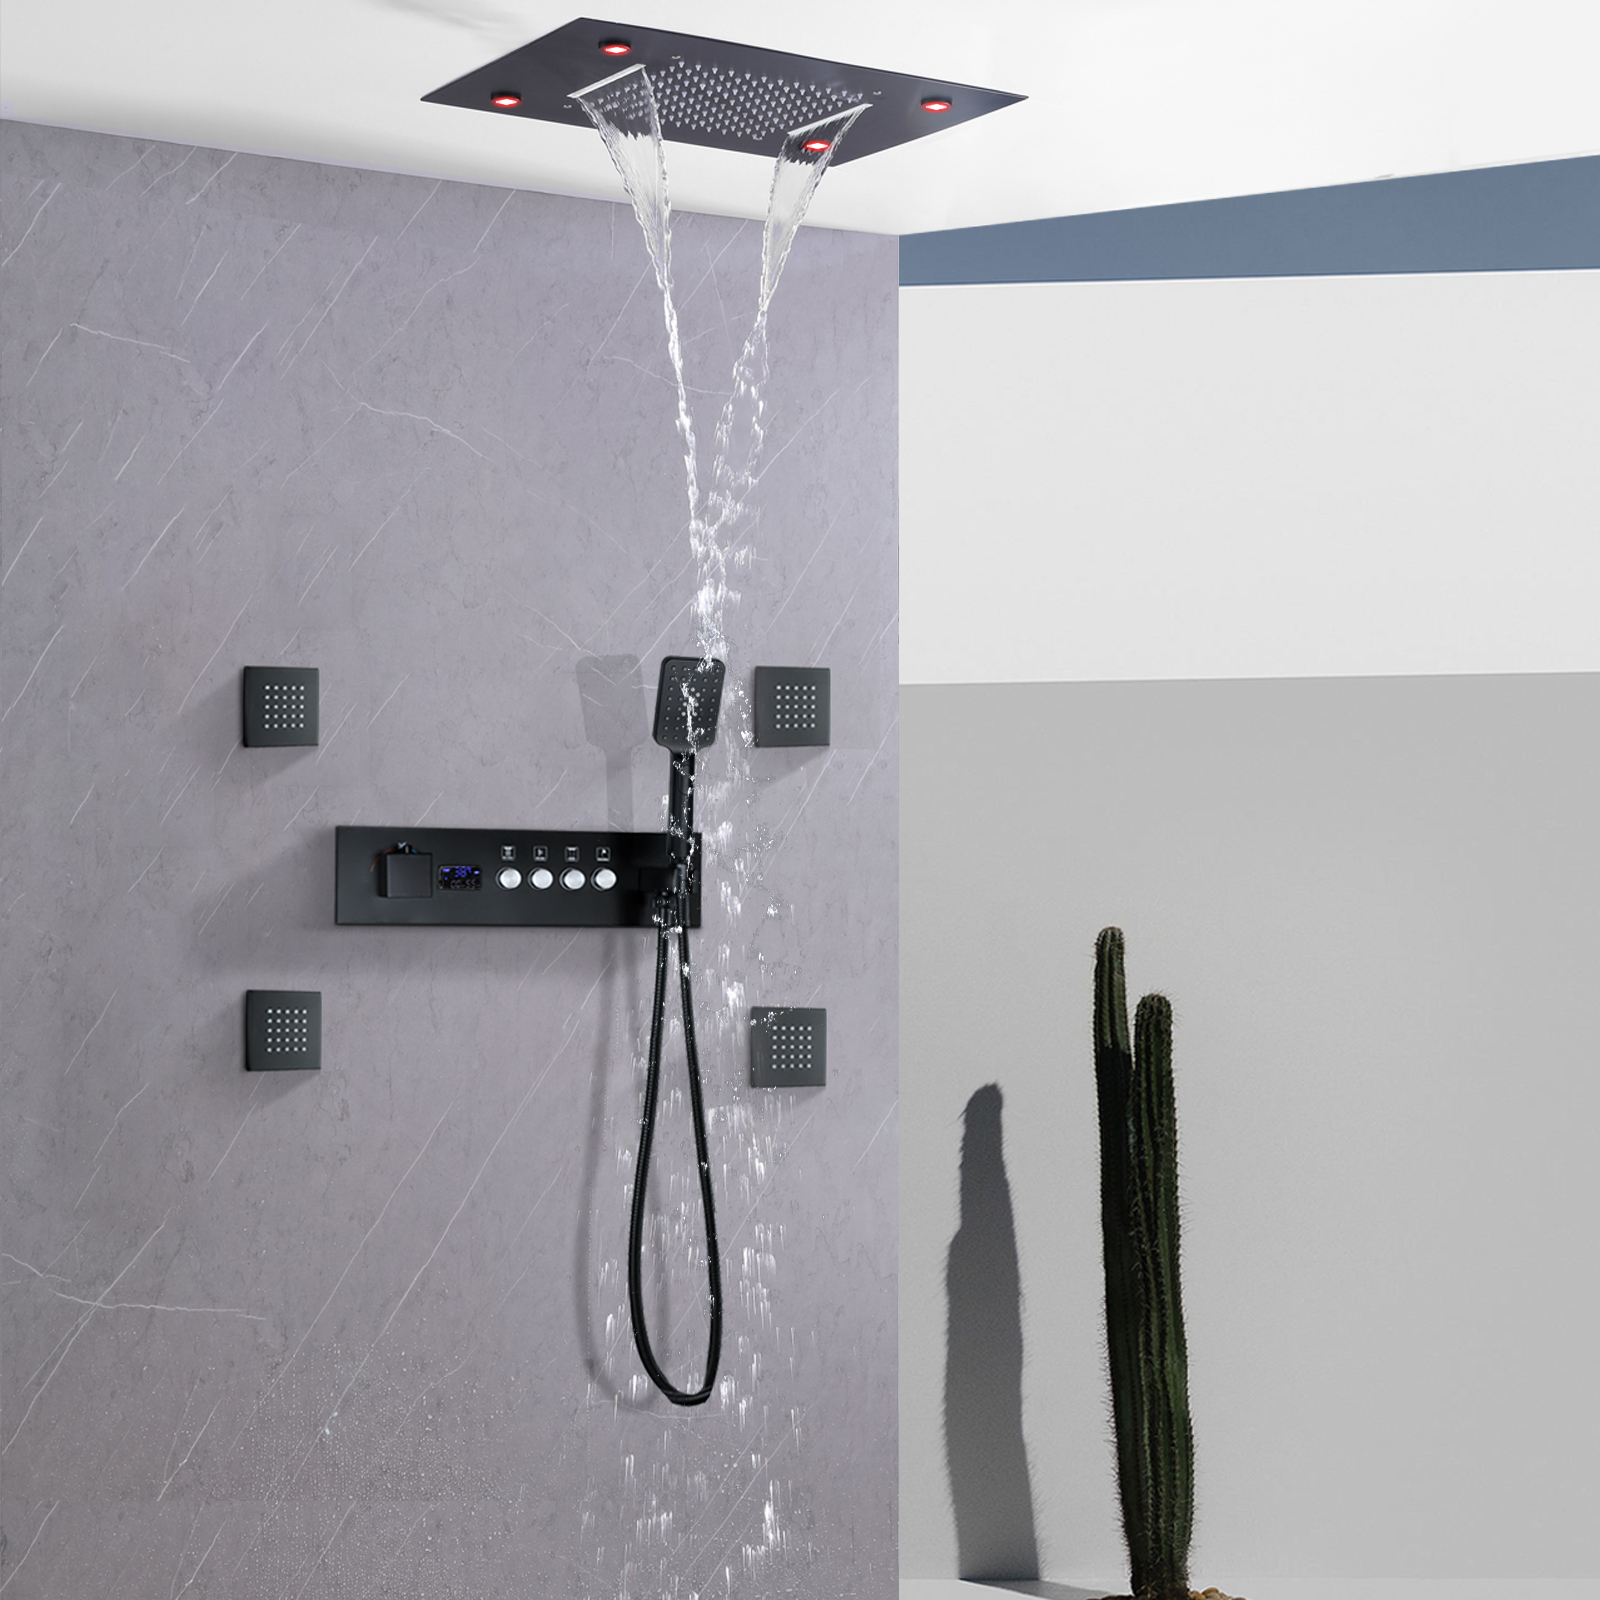 Juego de grifería de ducha de 500x360MM, pantalla Digital de temperatura constante, mezcladores de ducha ocultos para baño LED negro mate